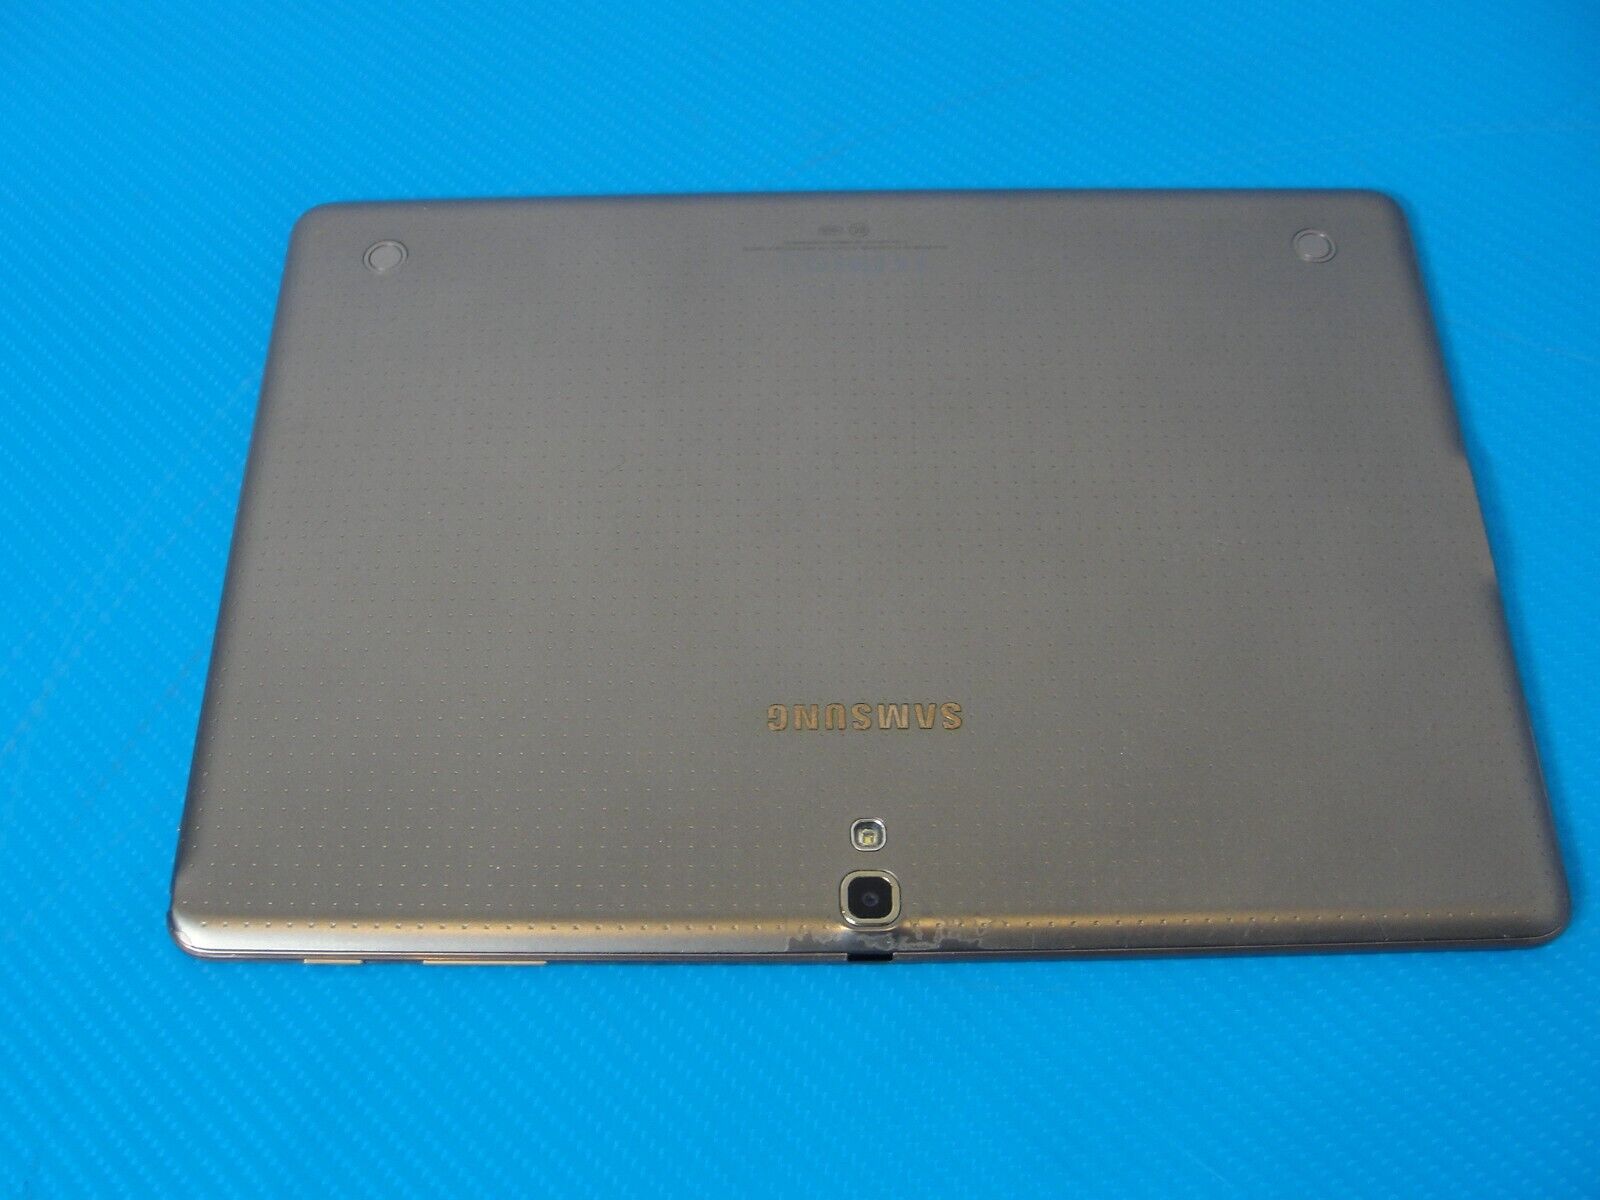 Samsung Galaxy Tab S SM-T800 16GB, Wi-Fi, 10.5in - Bronze Gold /Very Good